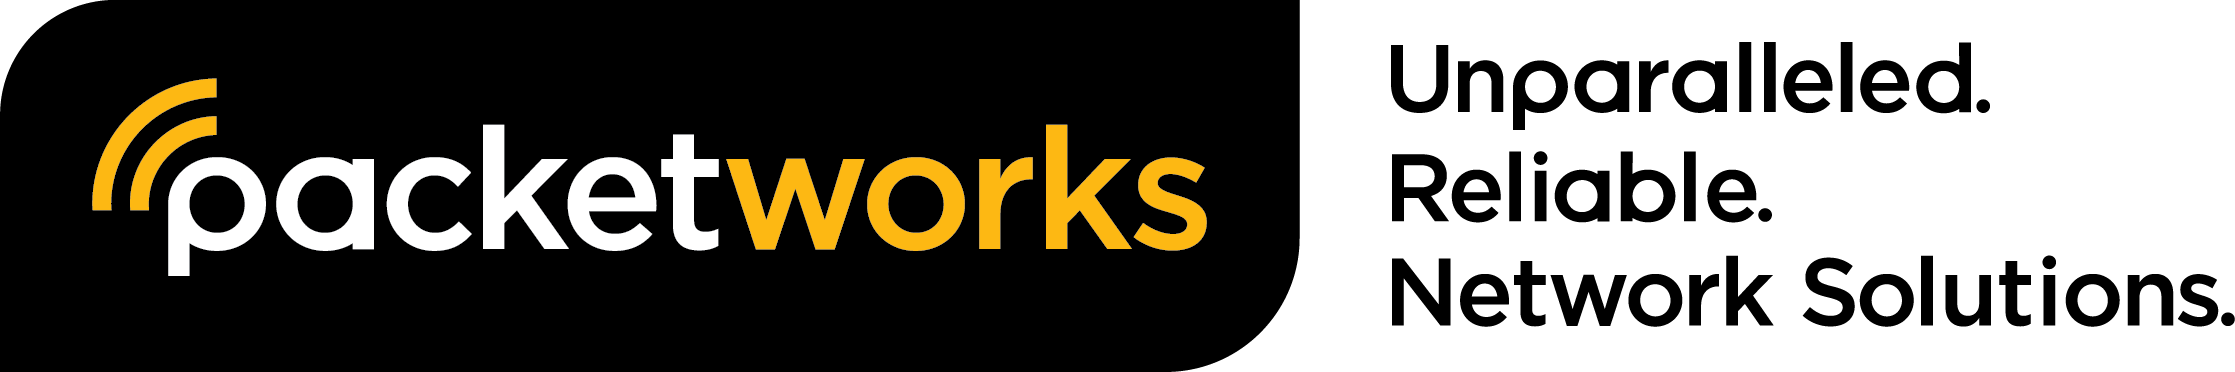 Blog - Packetworks